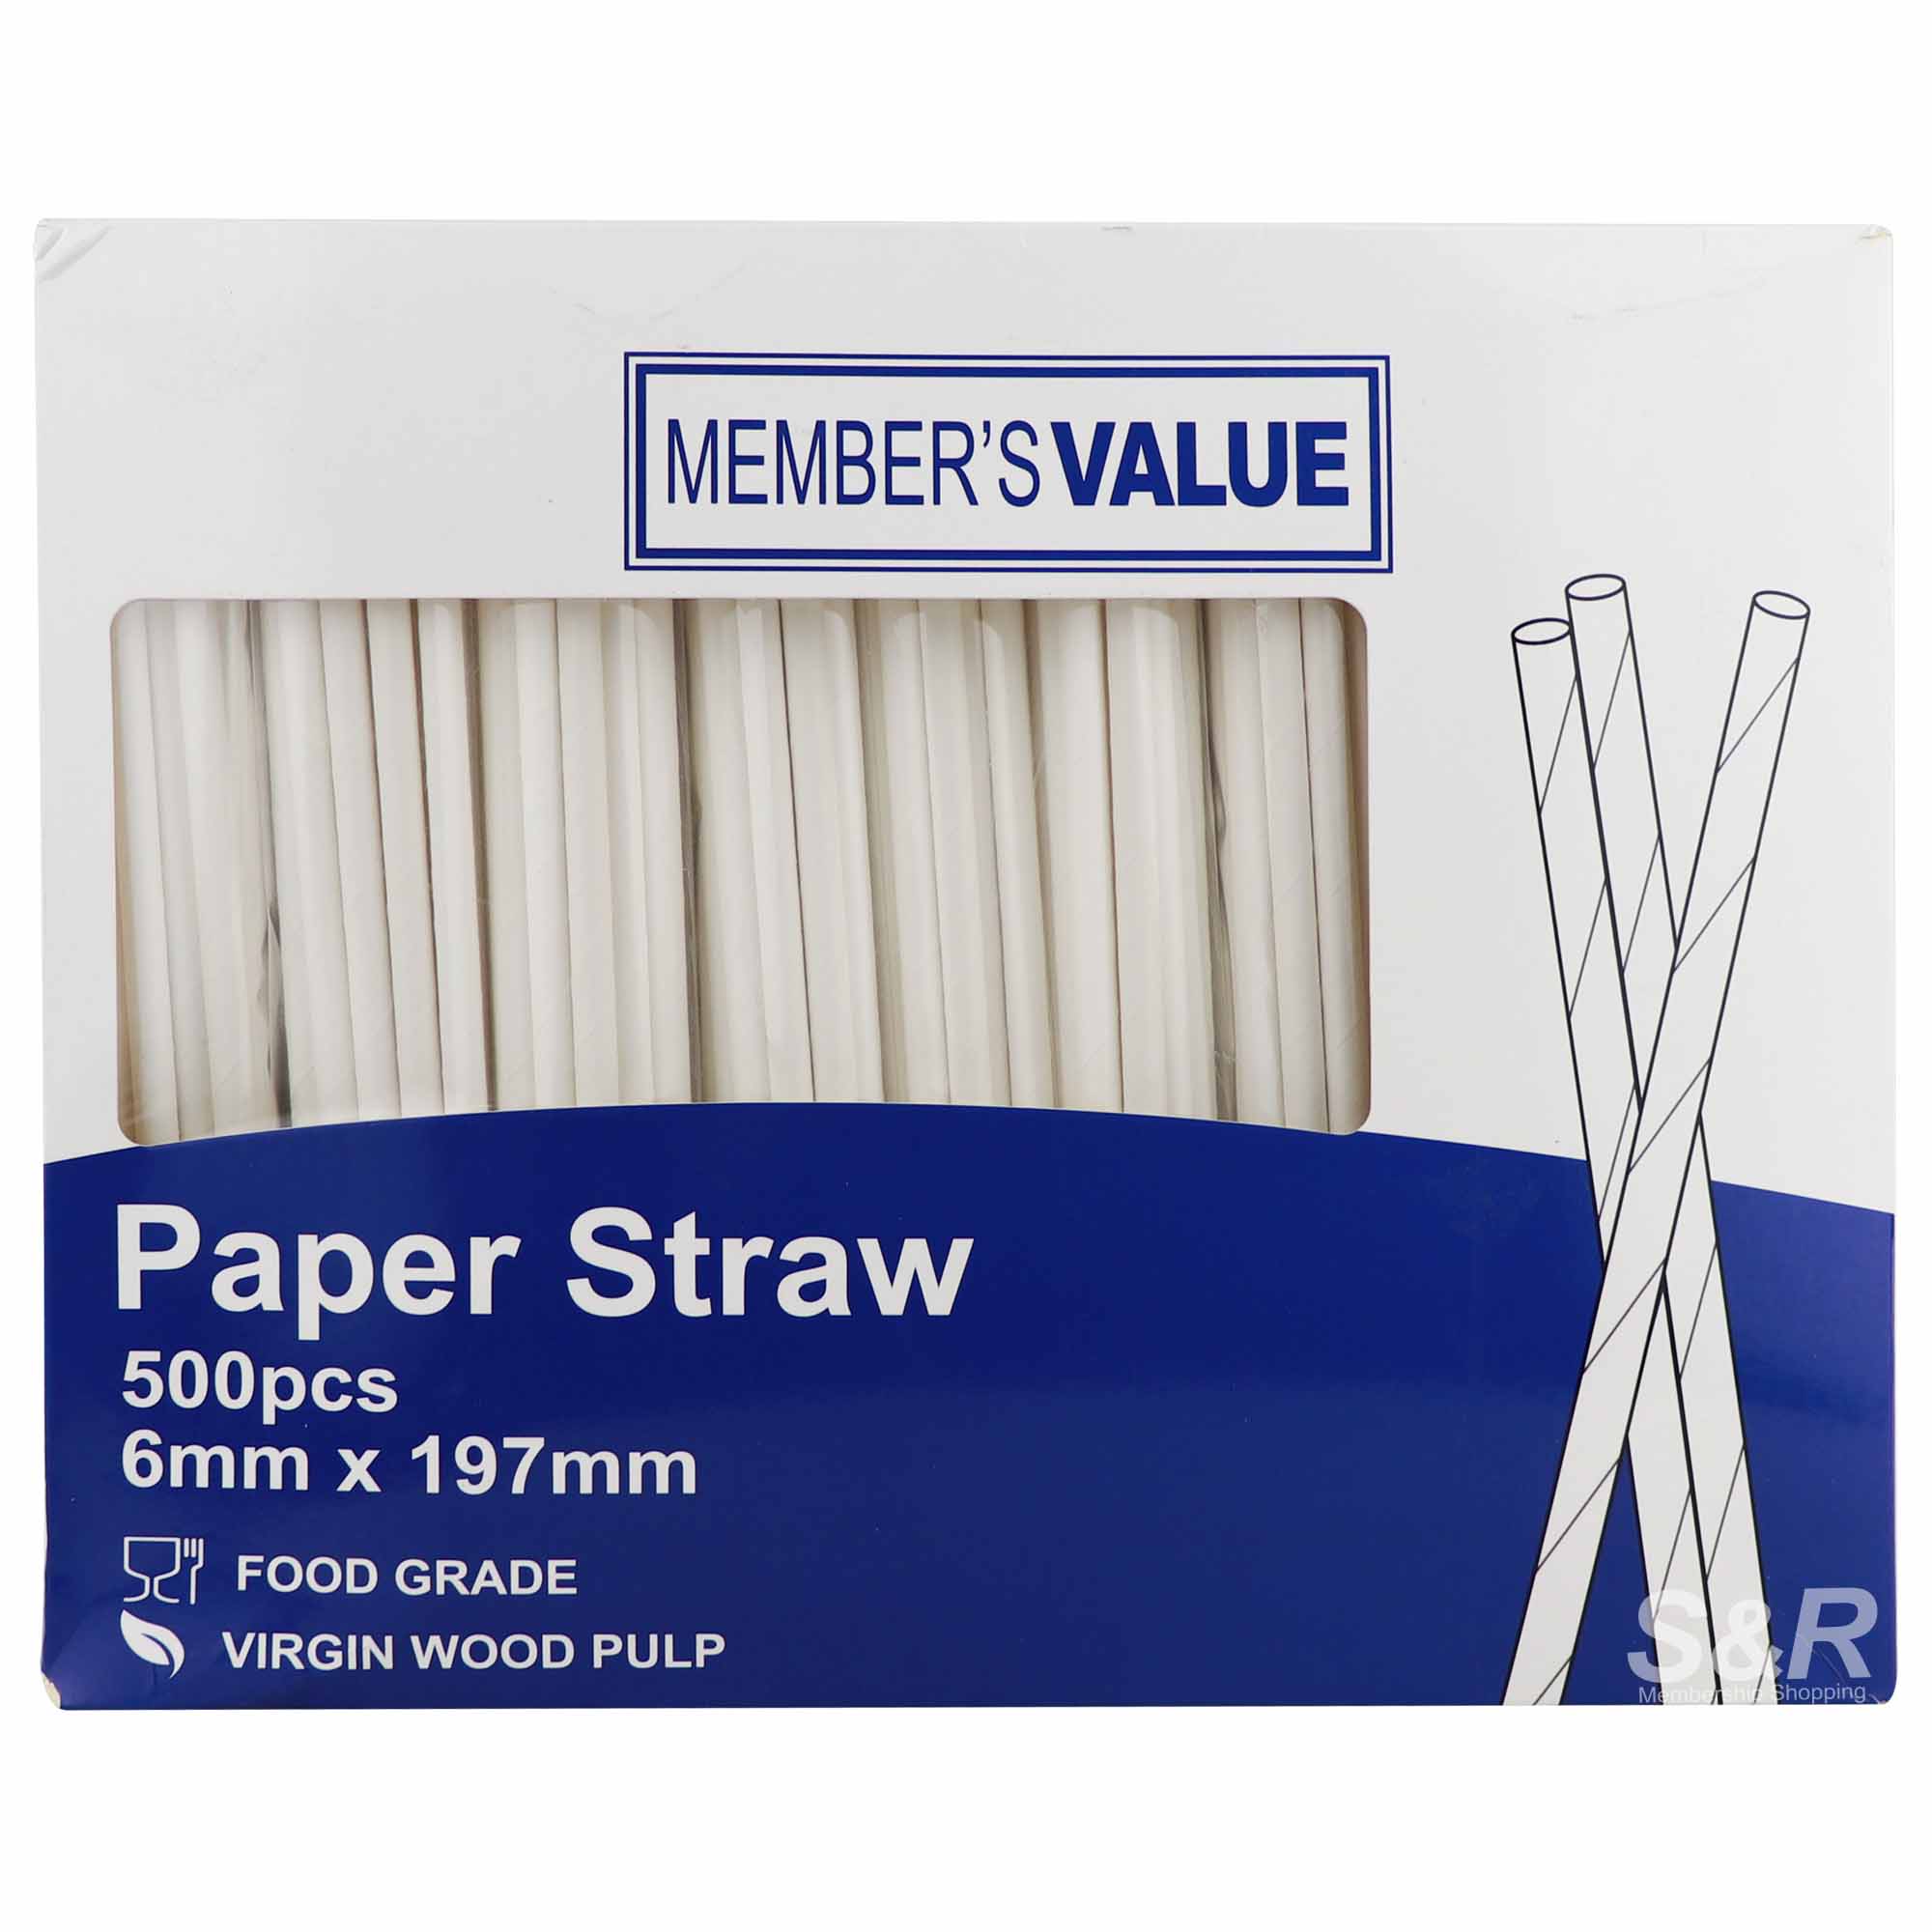 Member's Value Paper Straw 500pcs